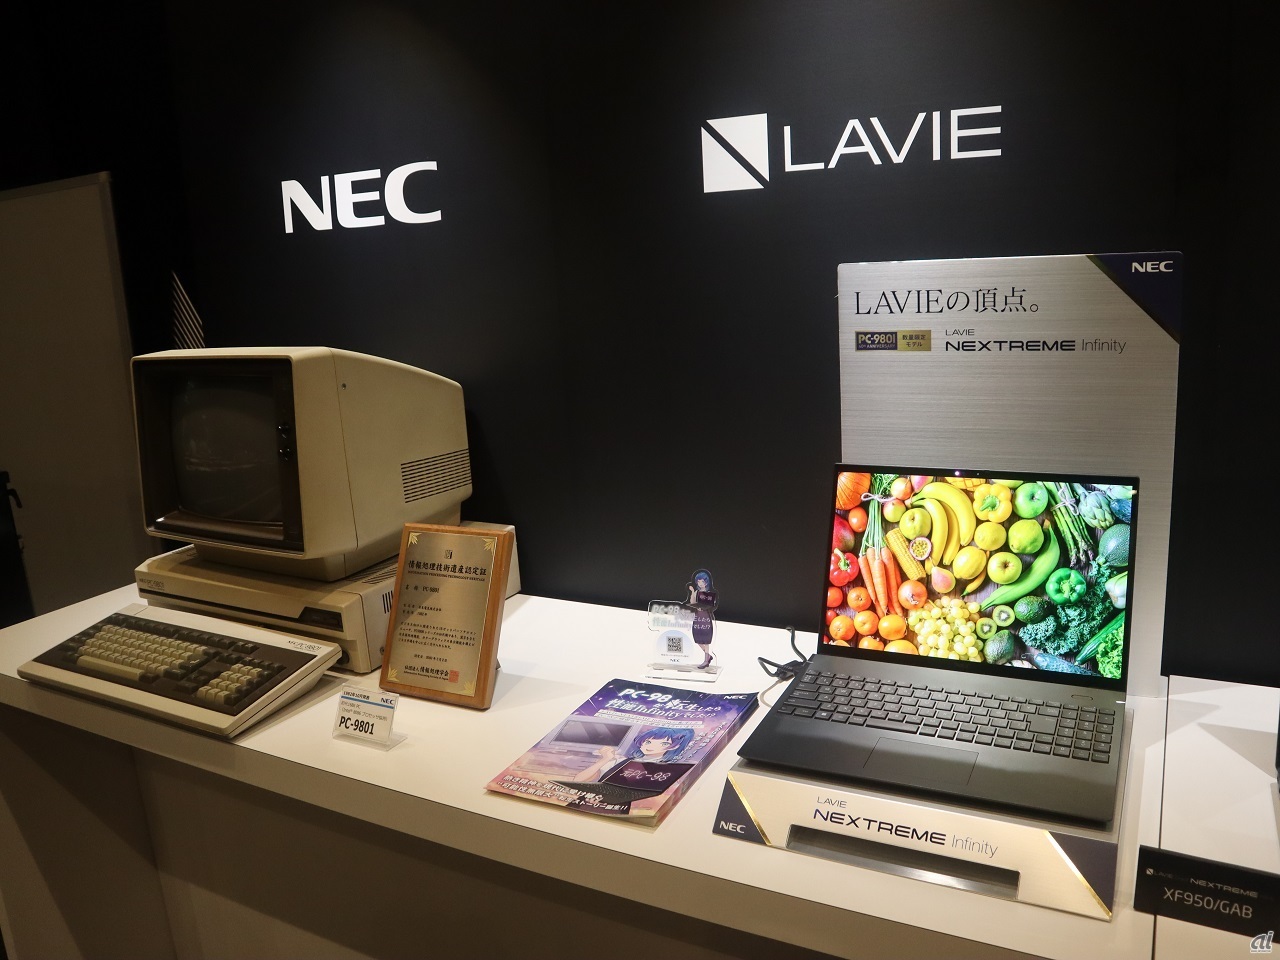 「LAVIE NEXTREME Infinity」（右）は、「PC-9801」（左）40周年記念のアニバーサリーモデルだ